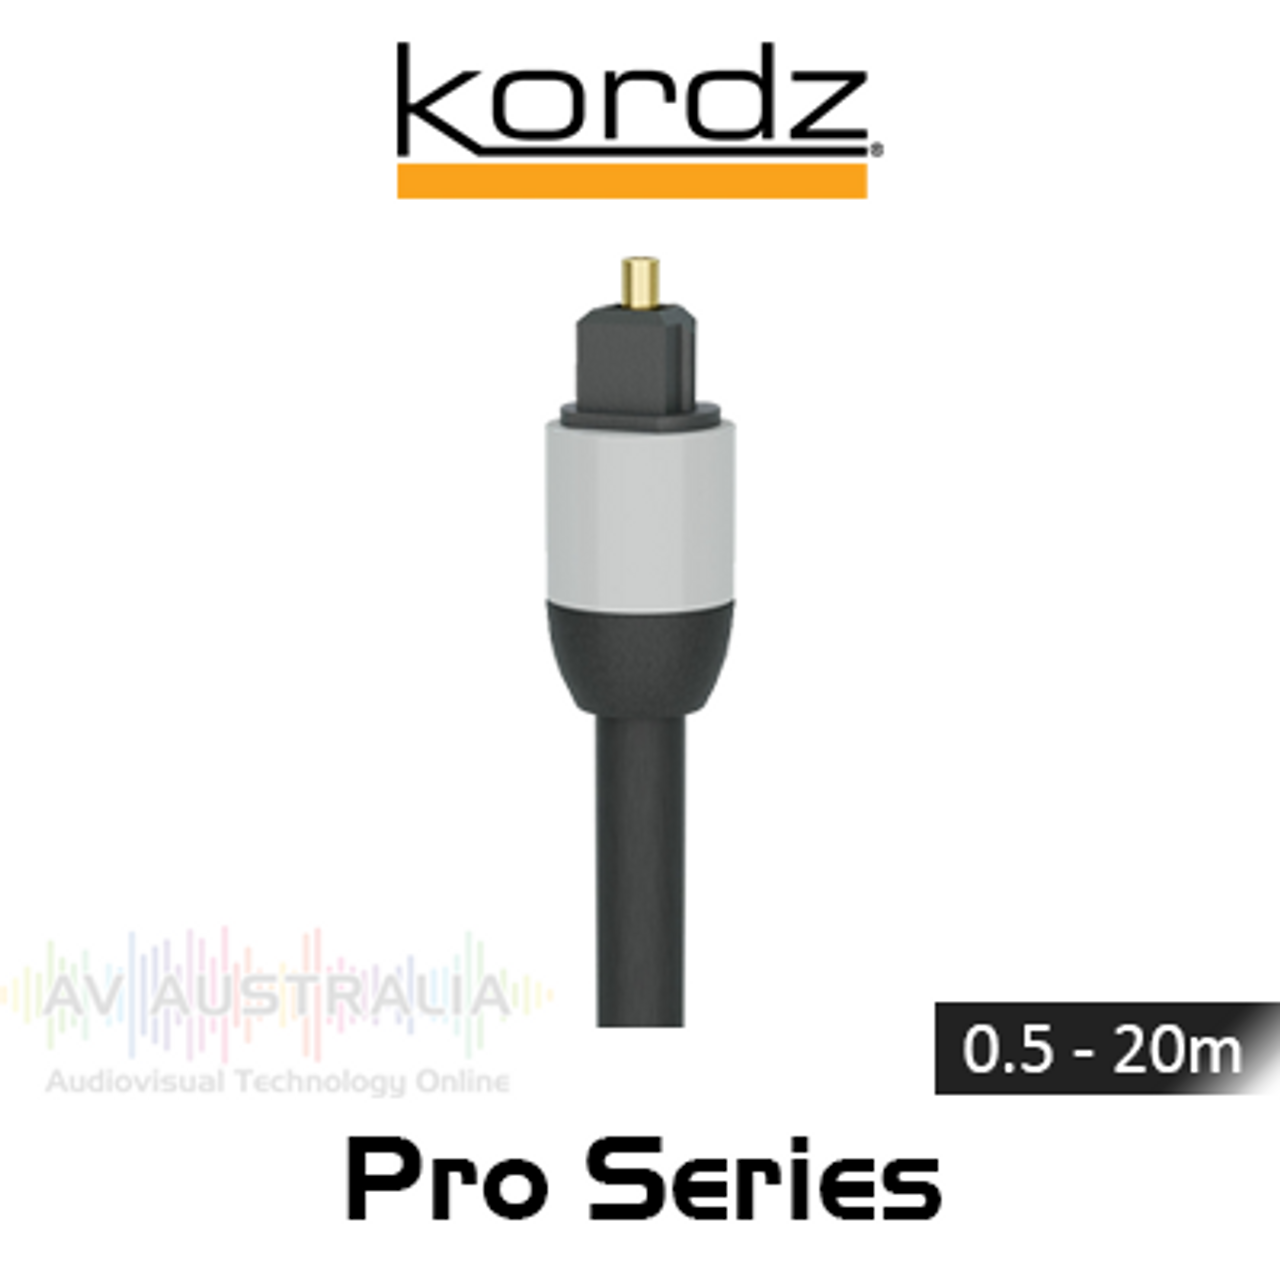 Kordz Pro Series TOSLink Optical Cables (0.5-20m)